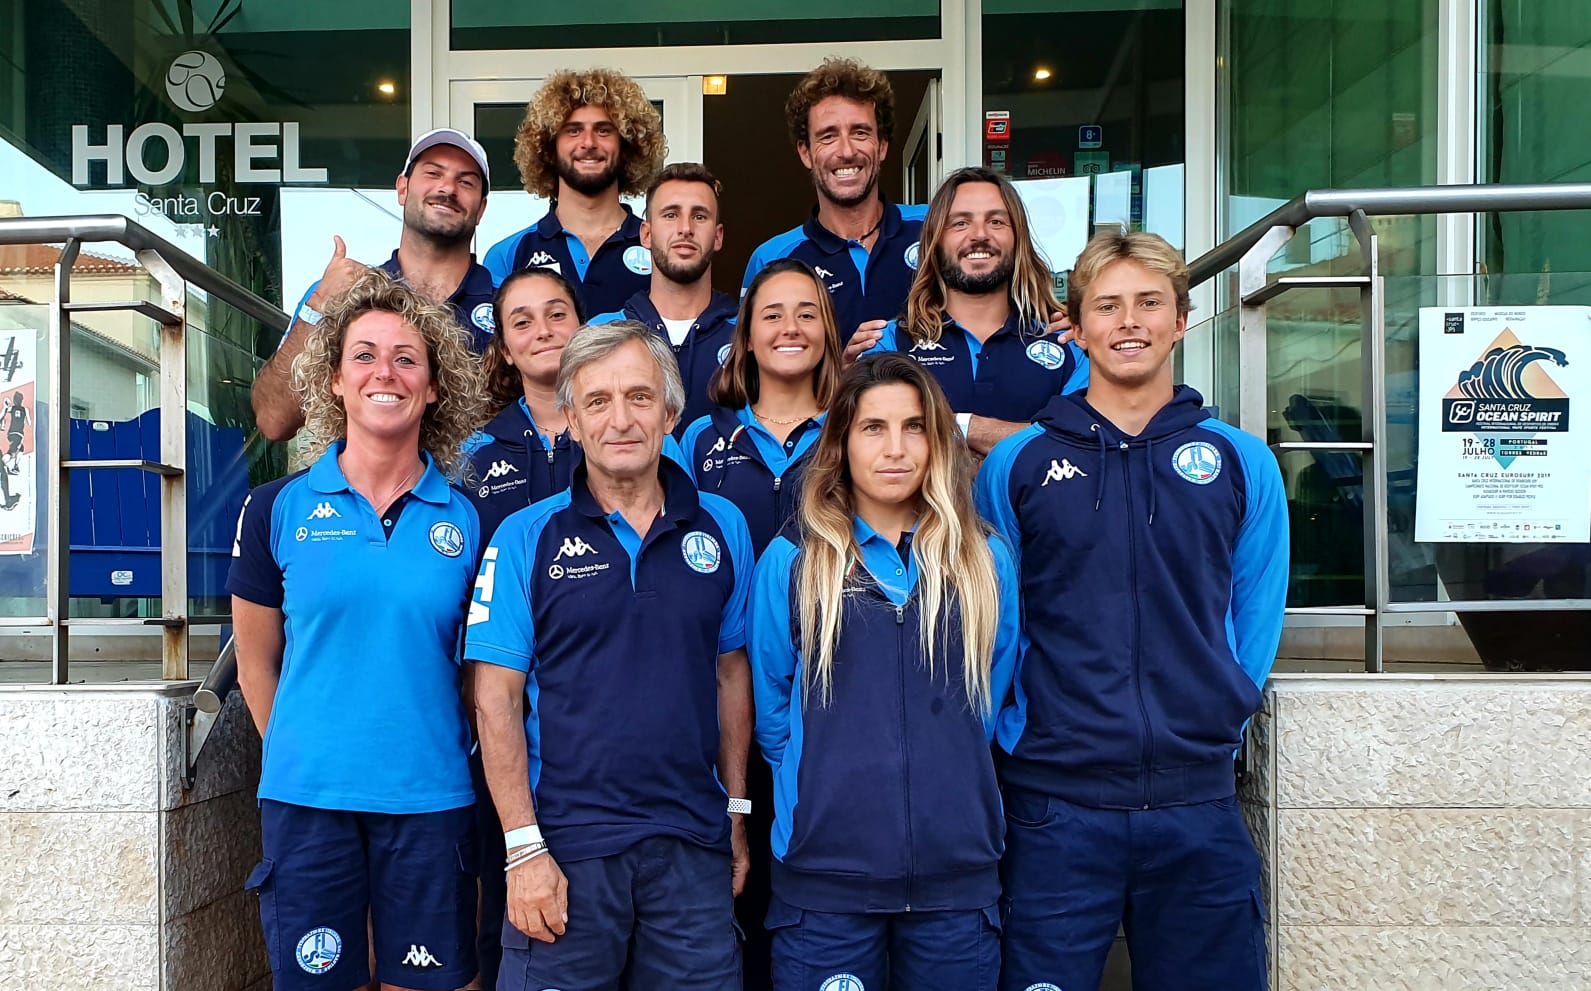 team-italia-santa-cruz-2019